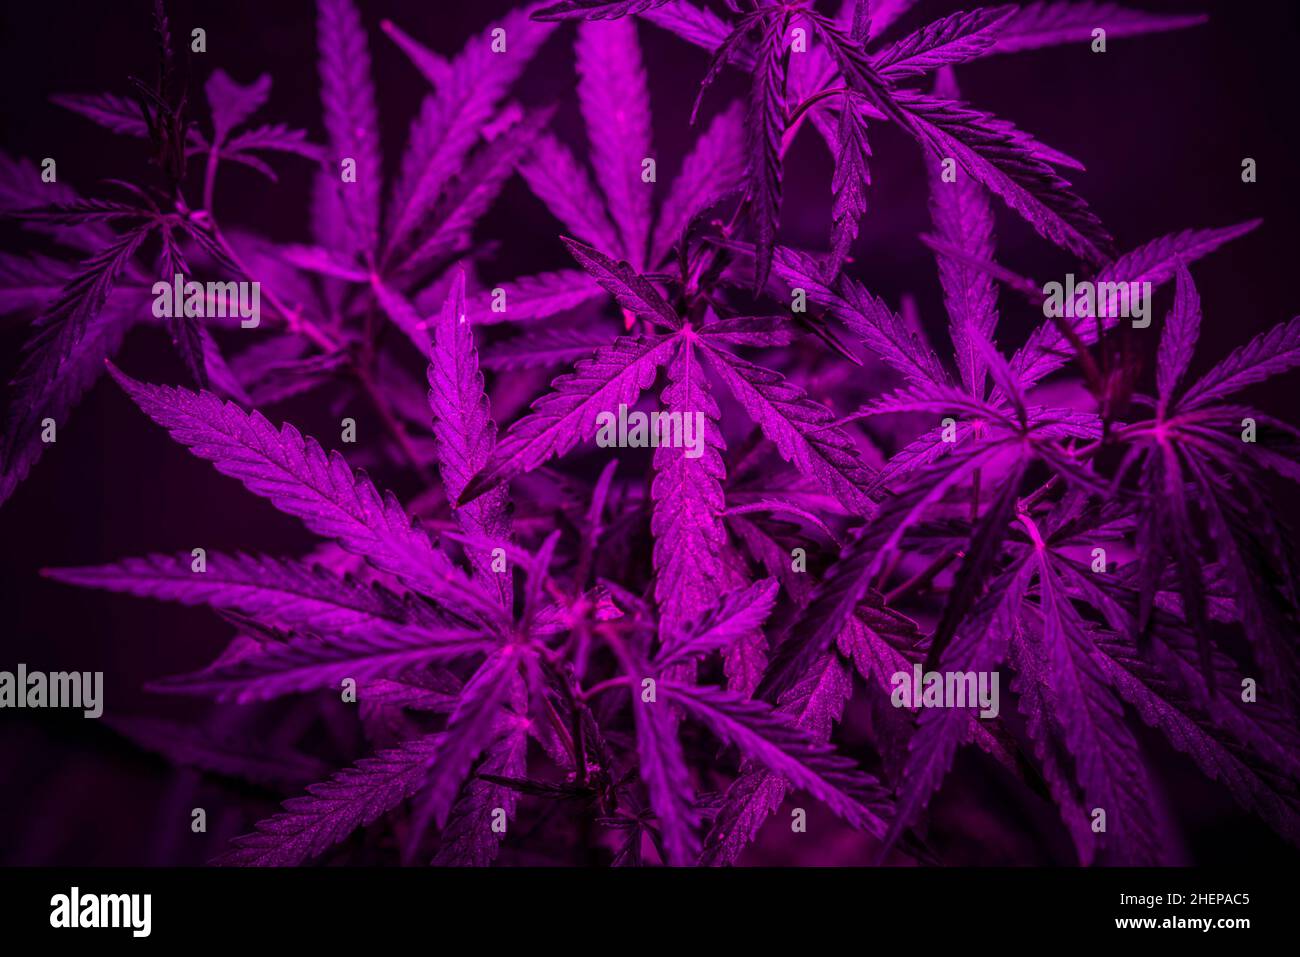 indoor growing cannabis with purple light. Stock Photo